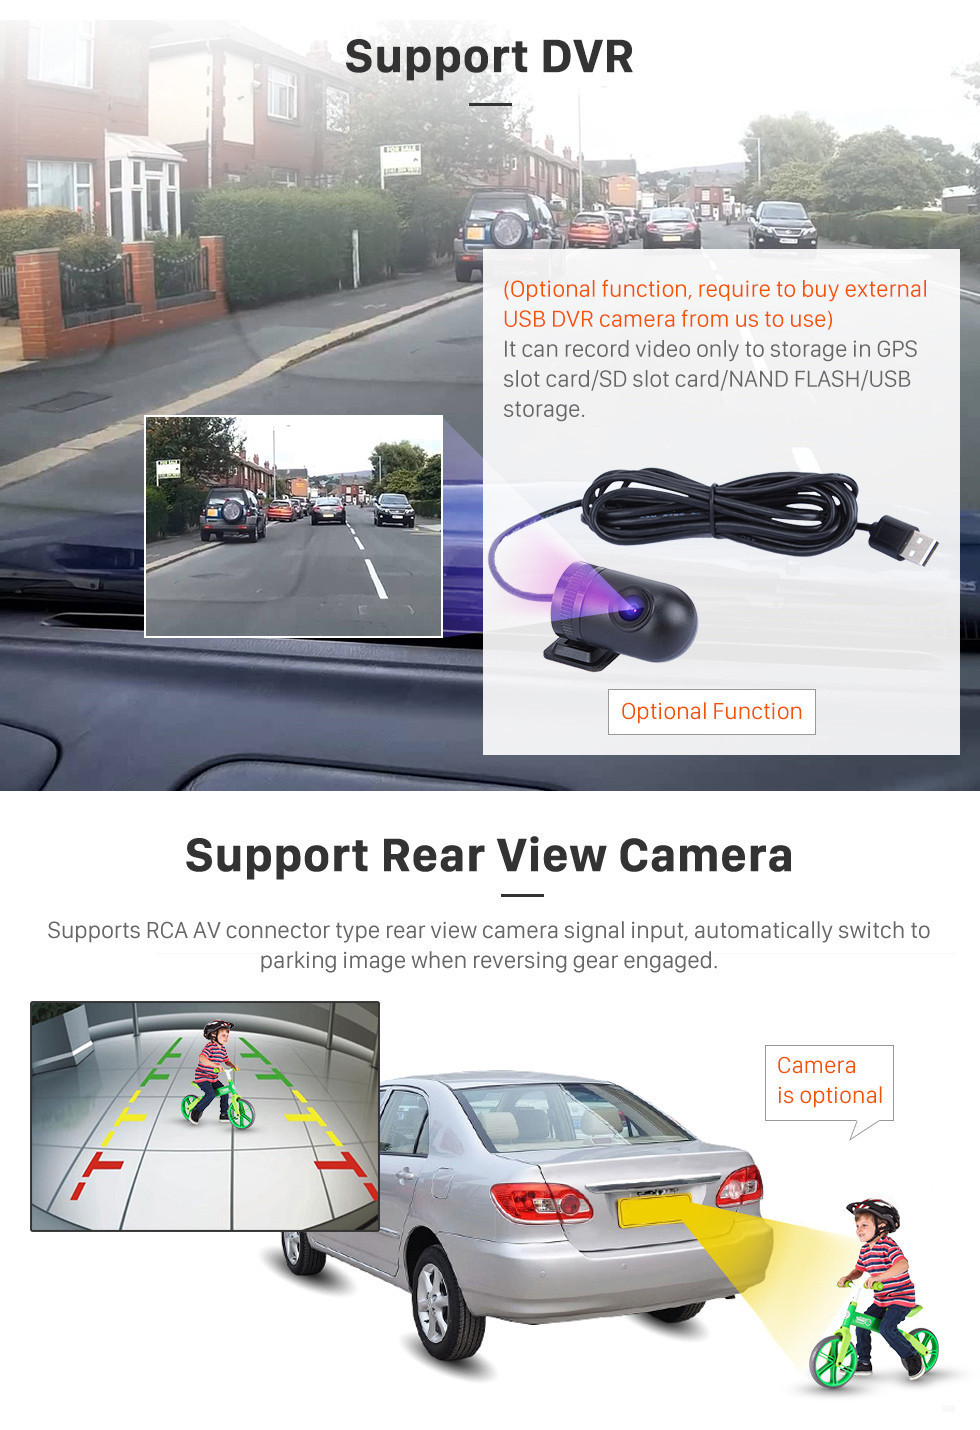 Seicane 9-Zoll-HD-Touchscreen 2016 Hyundai Elantra LHD Android 13.0 Radio DVD-Player GPS-Navigation mit WLAN Bluetooth Mirror Link OBD2 DAB+ DVR AUX